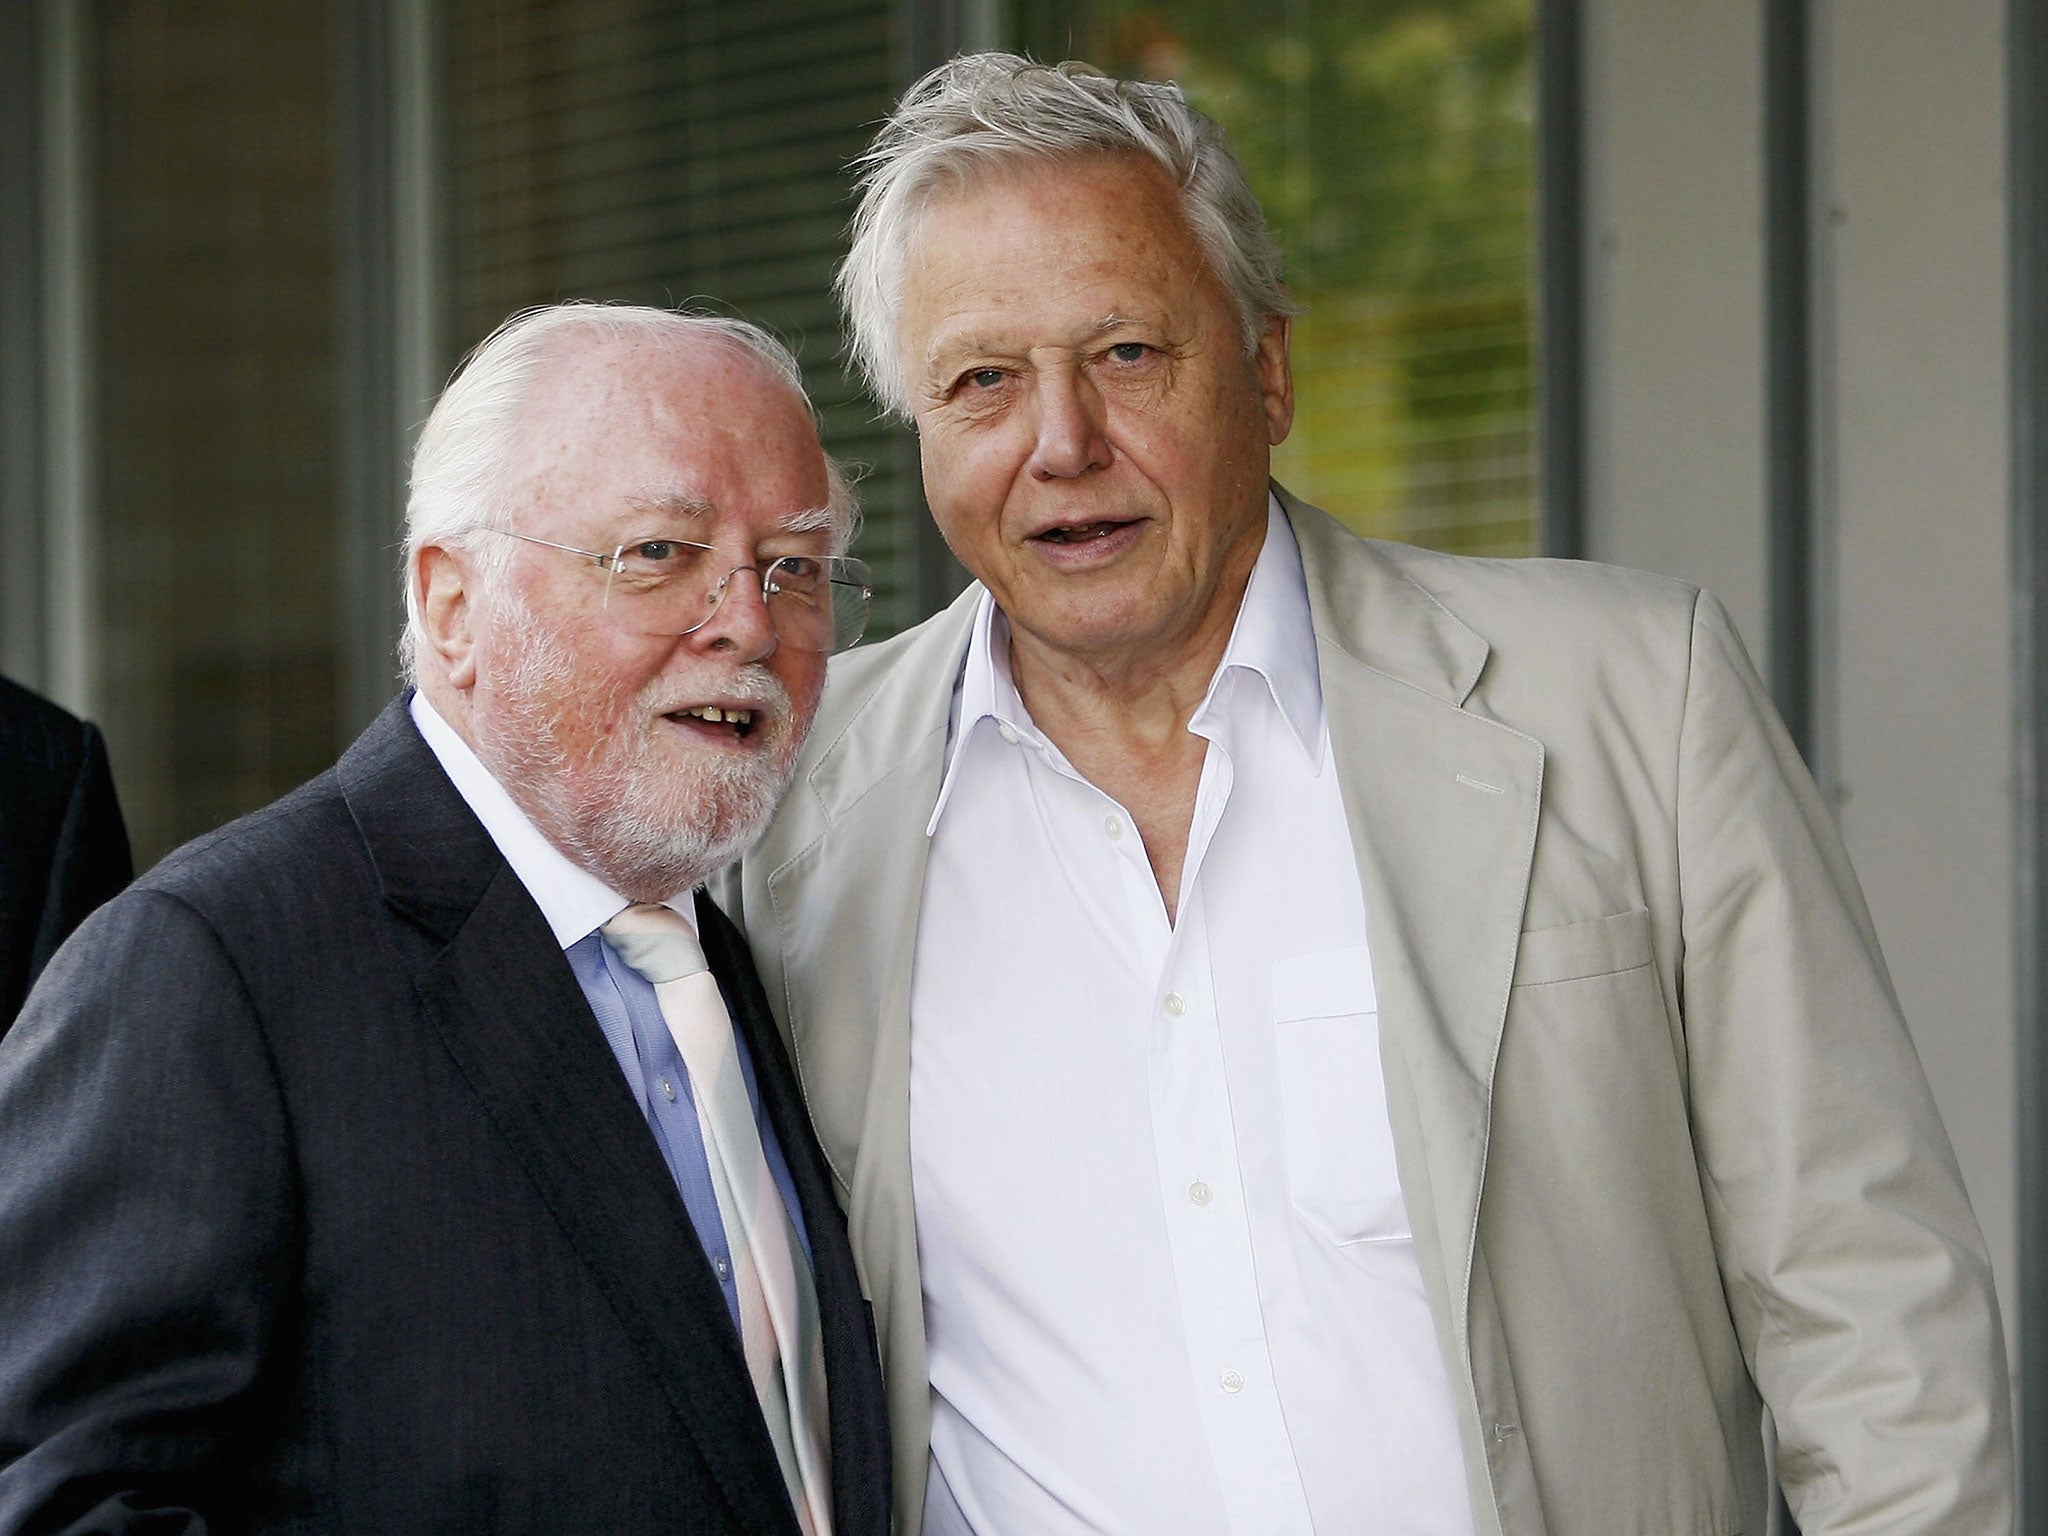 Brothers in art: Sir David Attenborough and Richard Attenborough